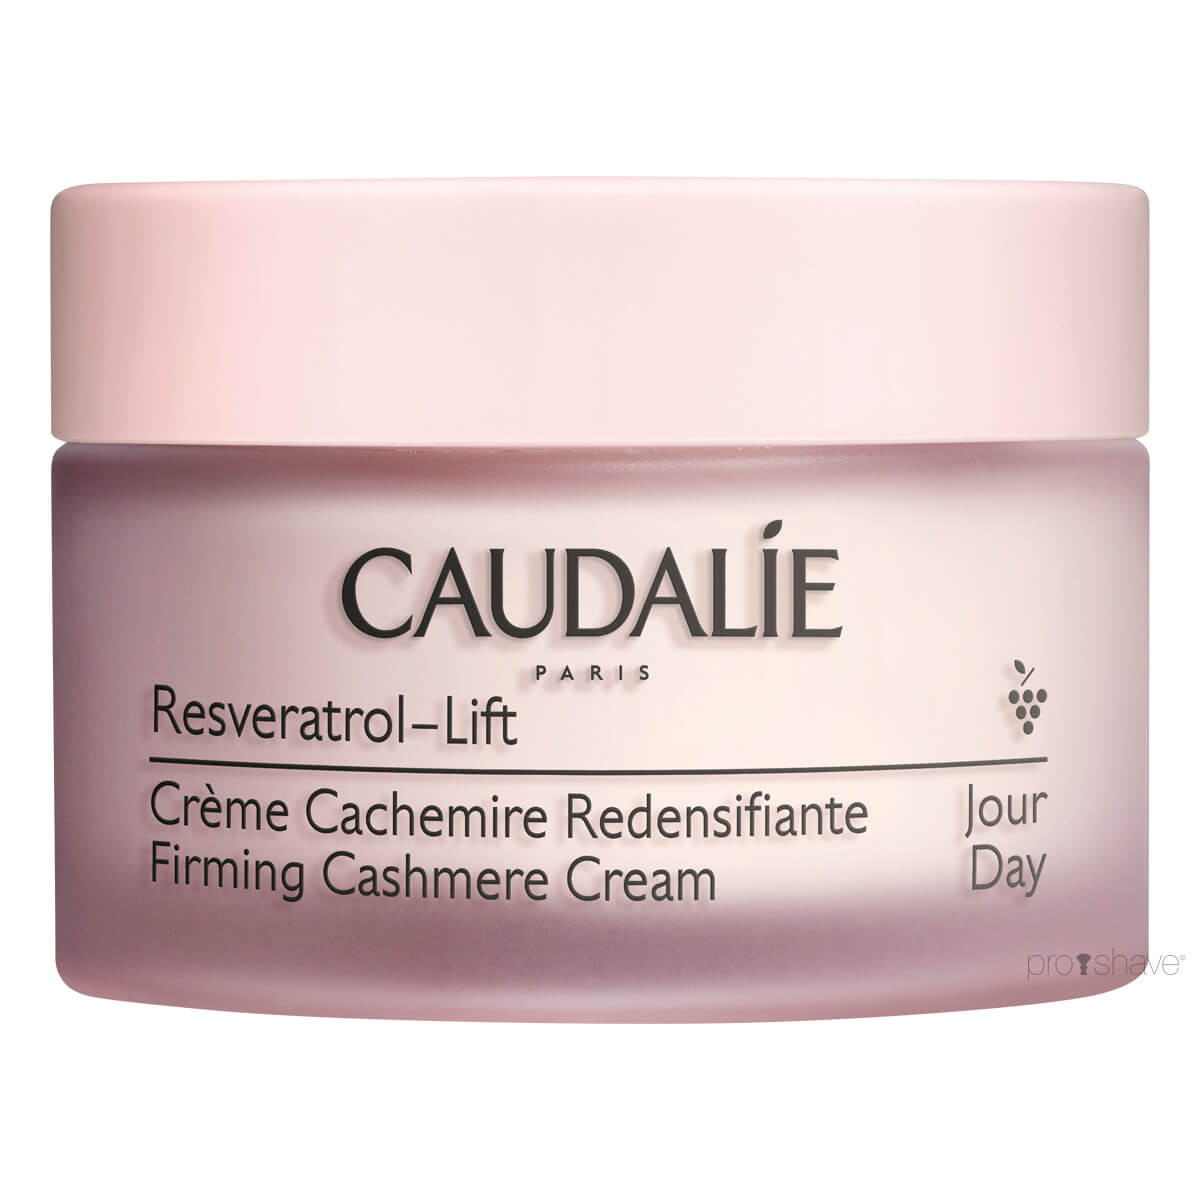 Se Caudalie Resveratrol Lift, Firming Cashmere Cream, Rejsestørrelse, 15 ml. hos Proshave